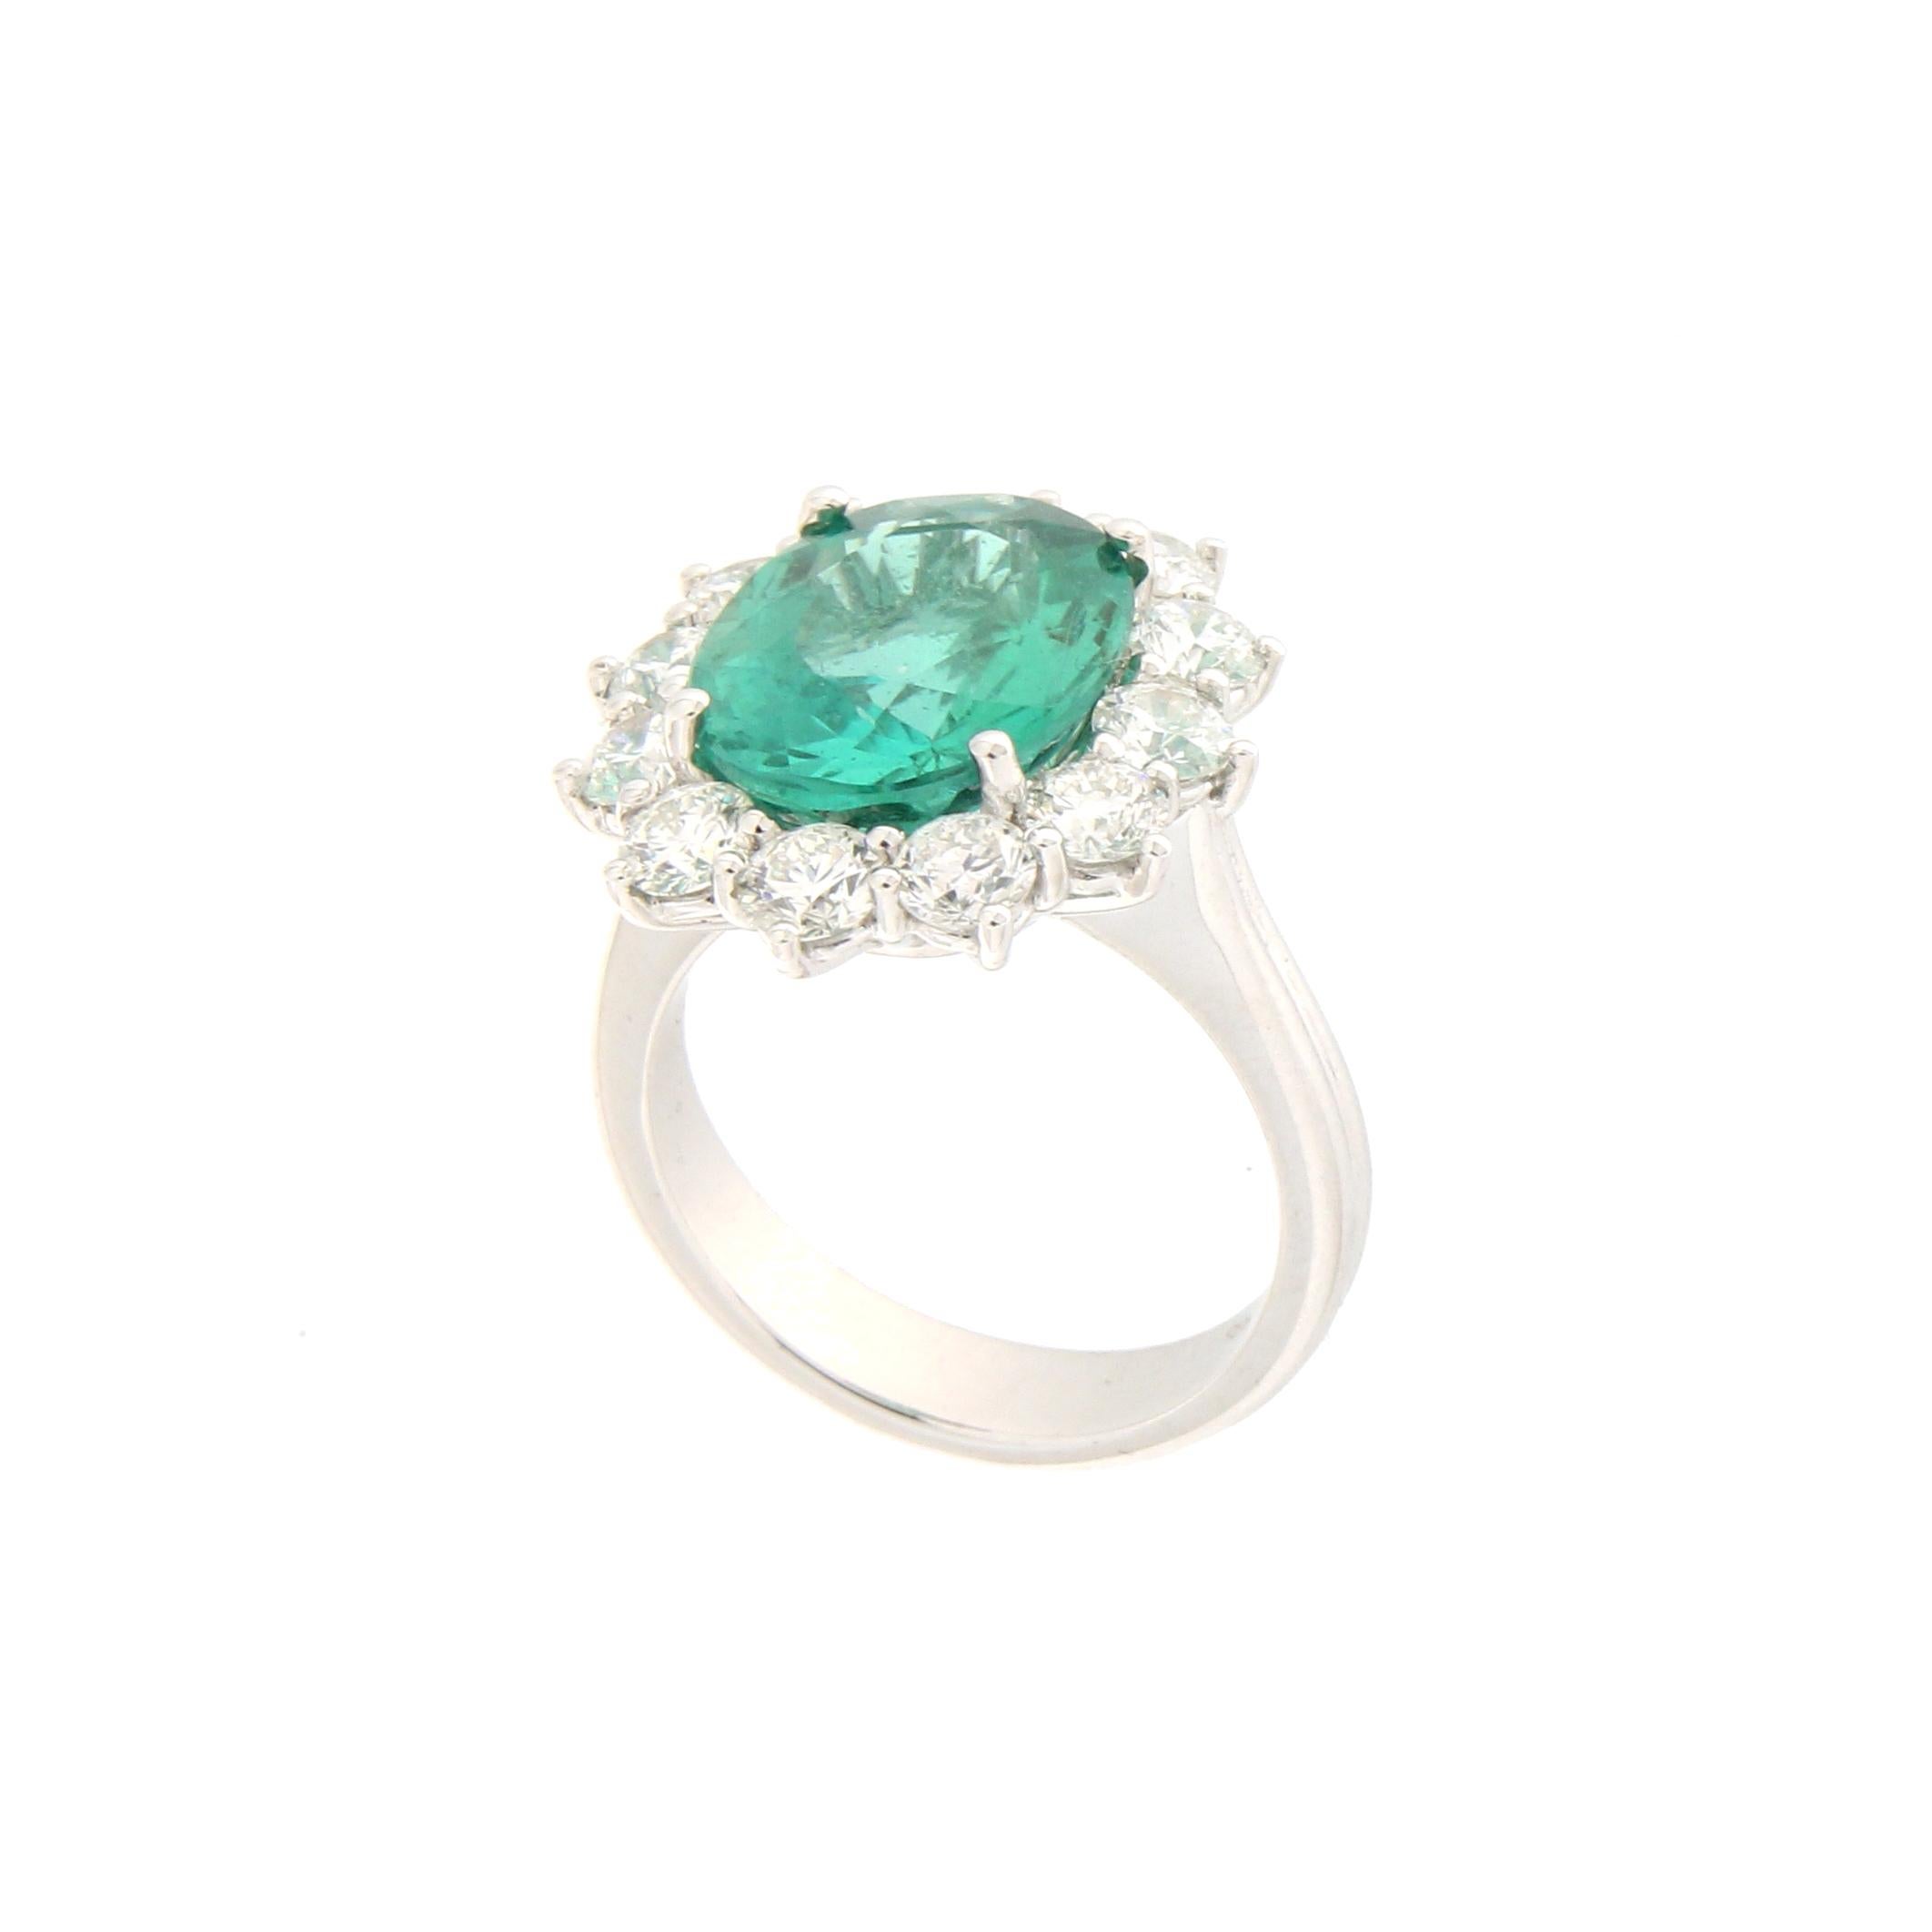 Artisan C.Dunaigre Certified 5.81 Carat Brazilian Green Emerald Diamonds Engagement Ring For Sale